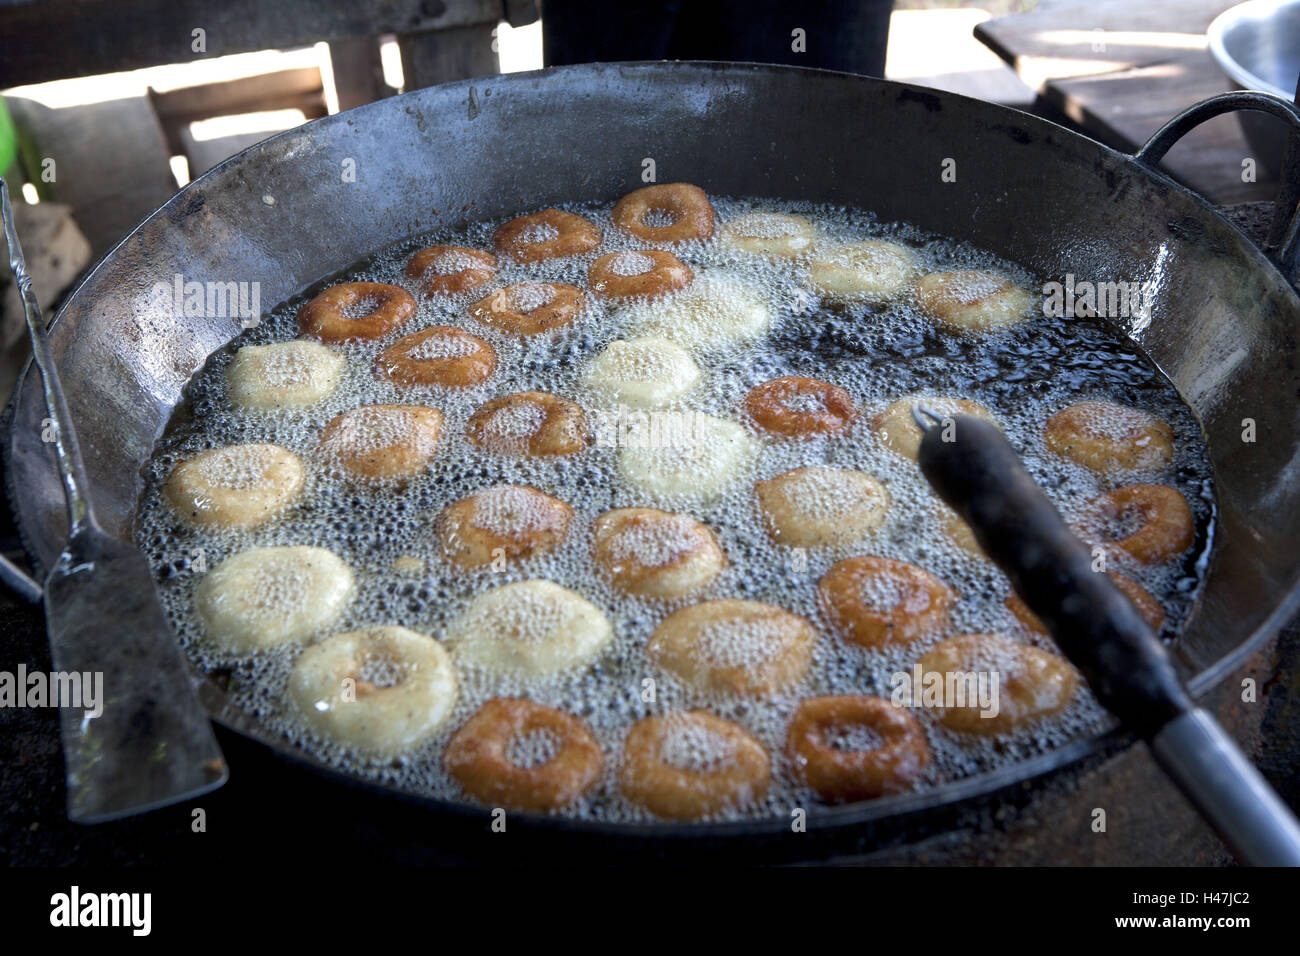 Myanmar, street cuisine, fried foods, Stock Photo